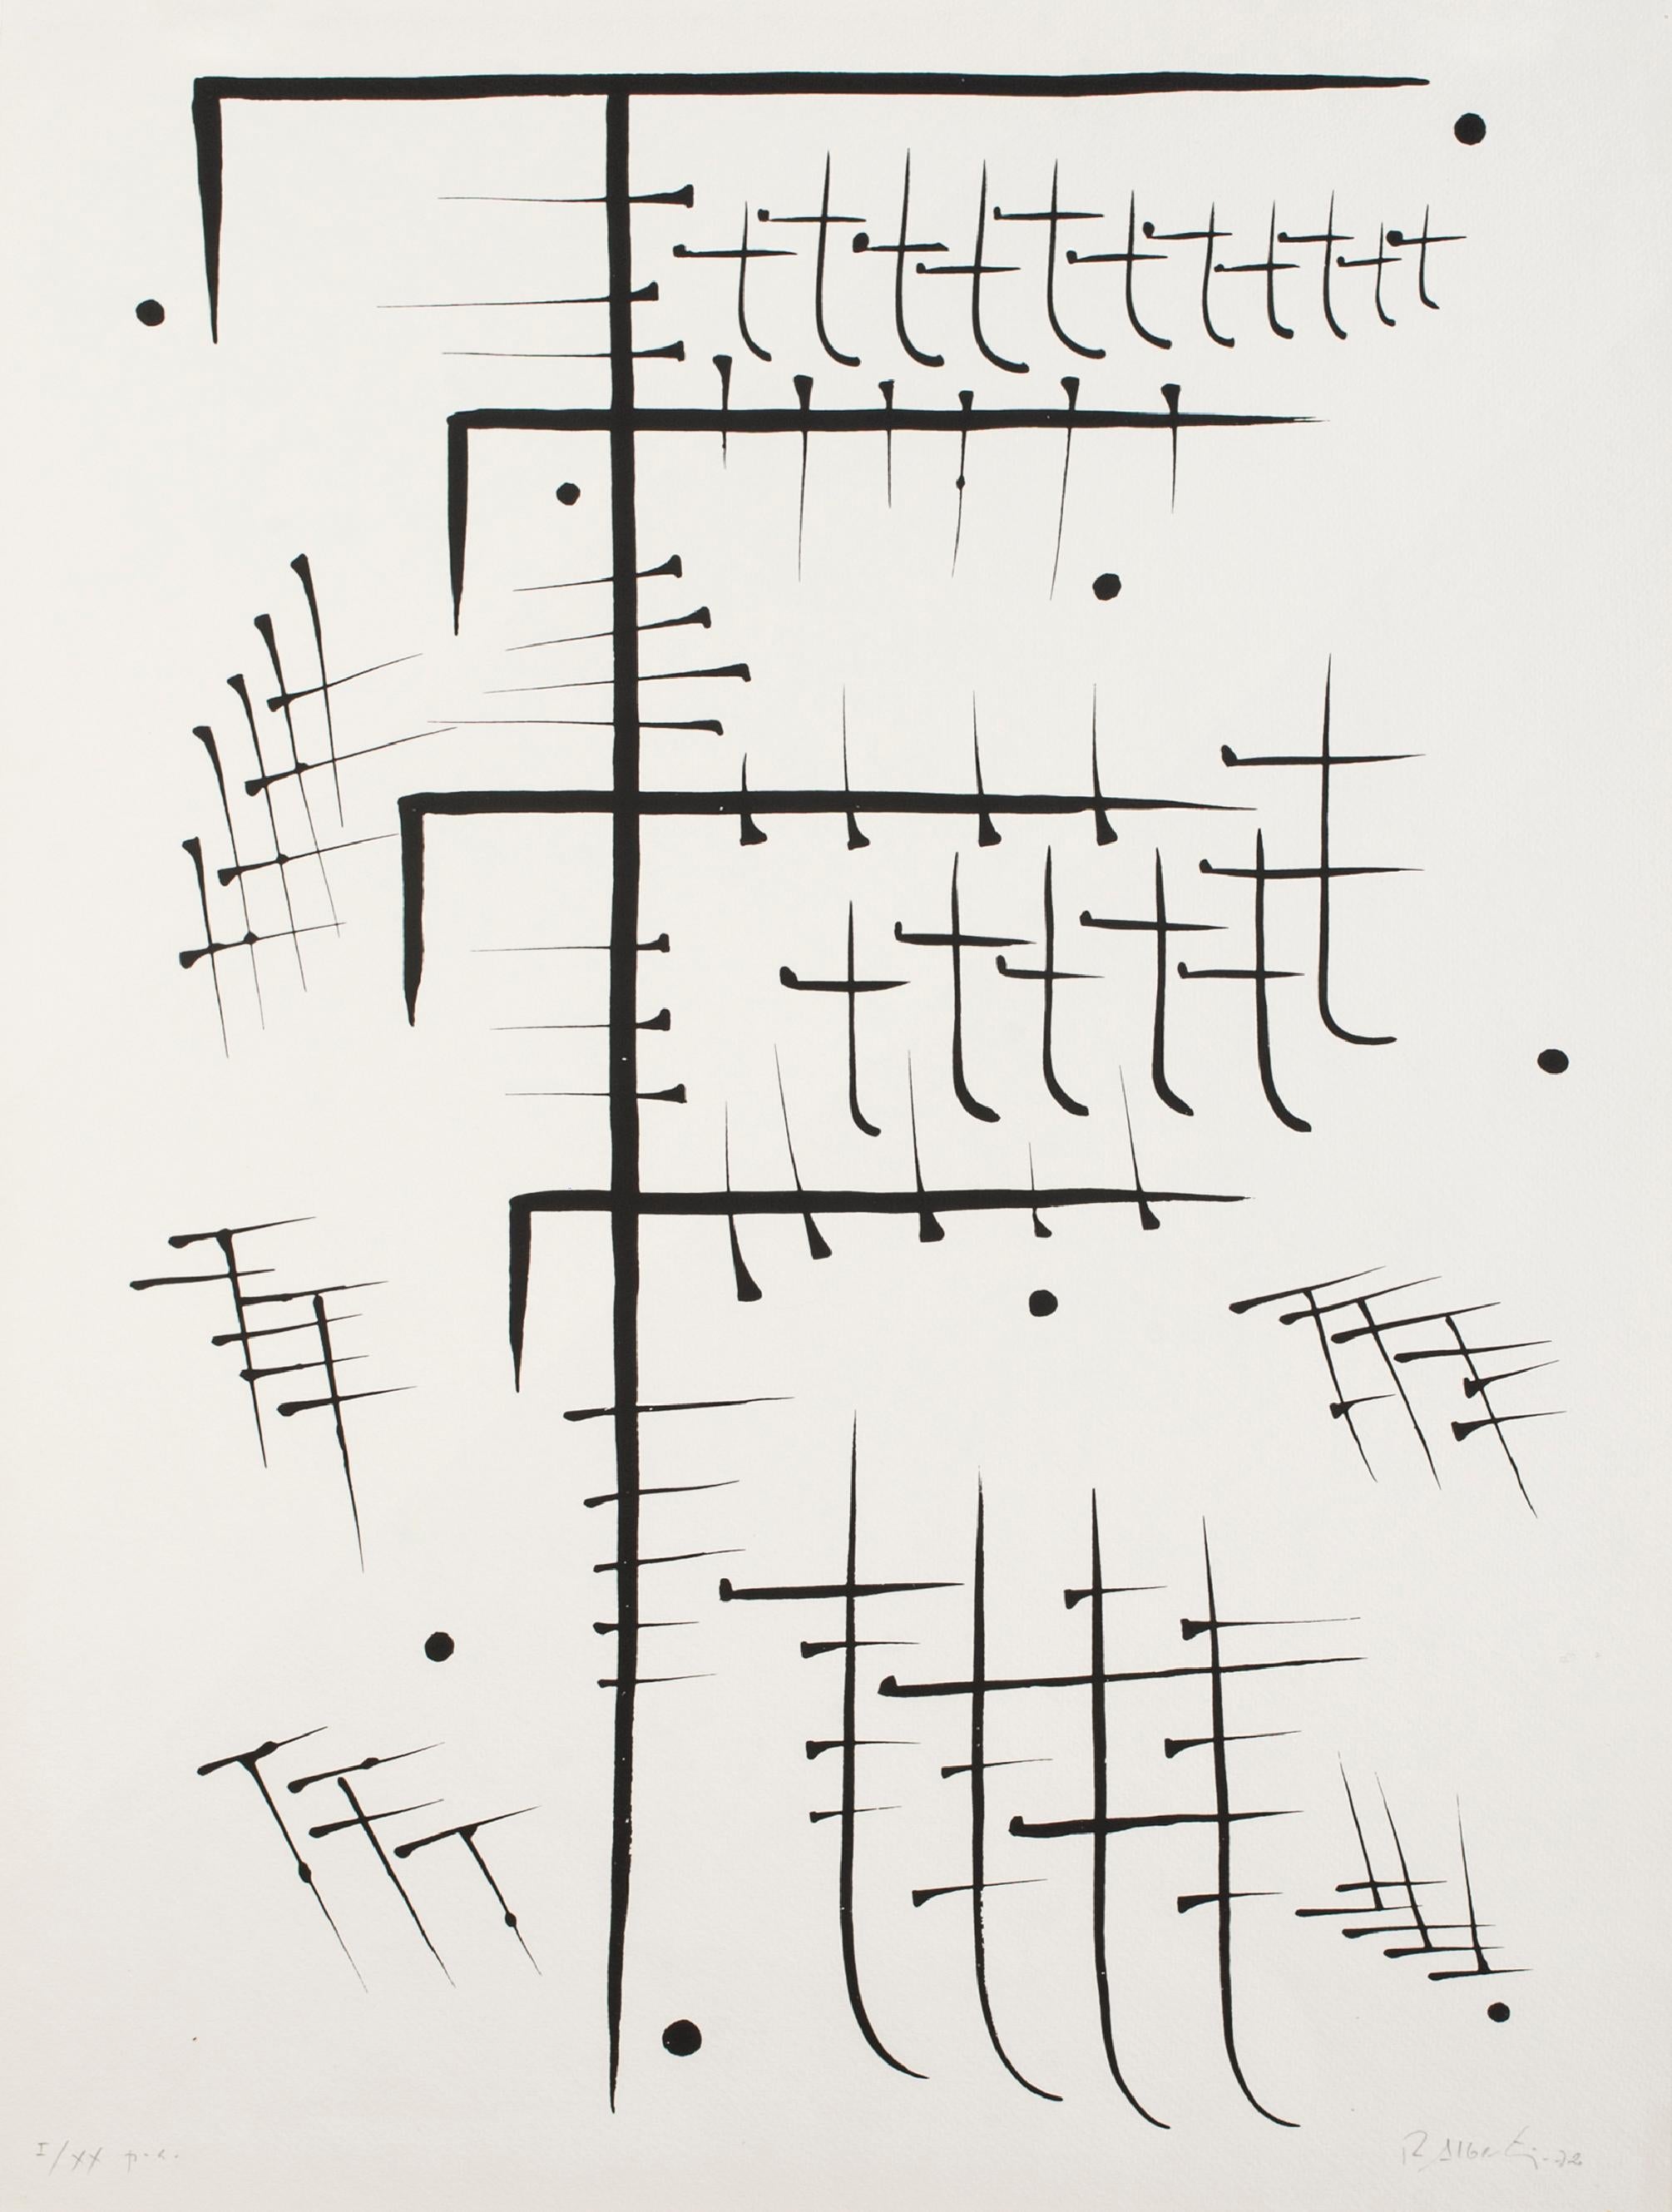 Rafael Alberti Abstract Print - Letter T - Original Lithograph by Raphael Alberti - 1972